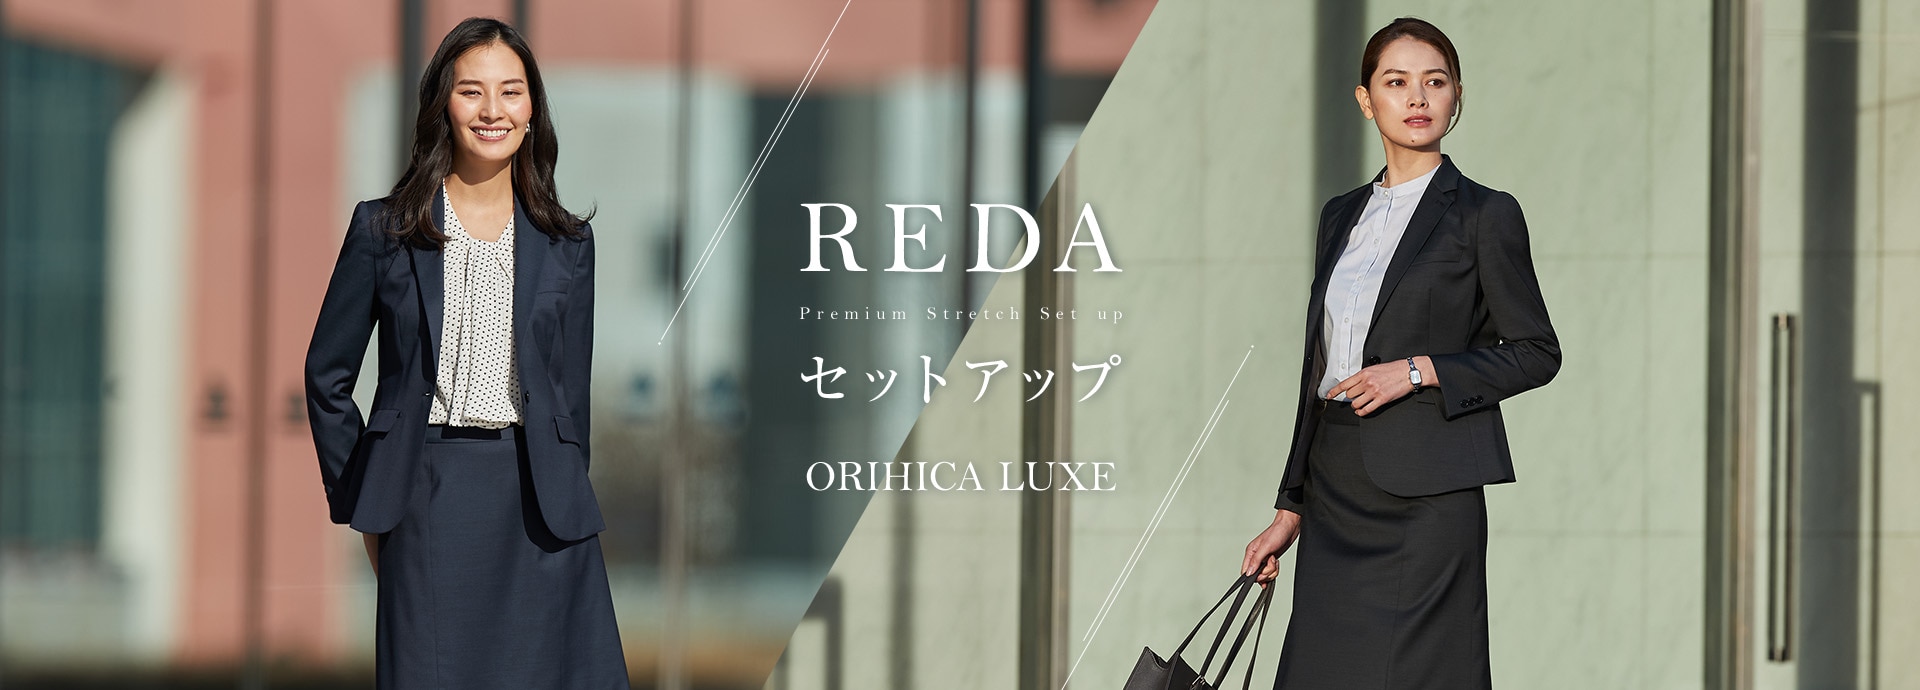 REDA セットアップ Premium Stretch Set up ORIHICA LUXE